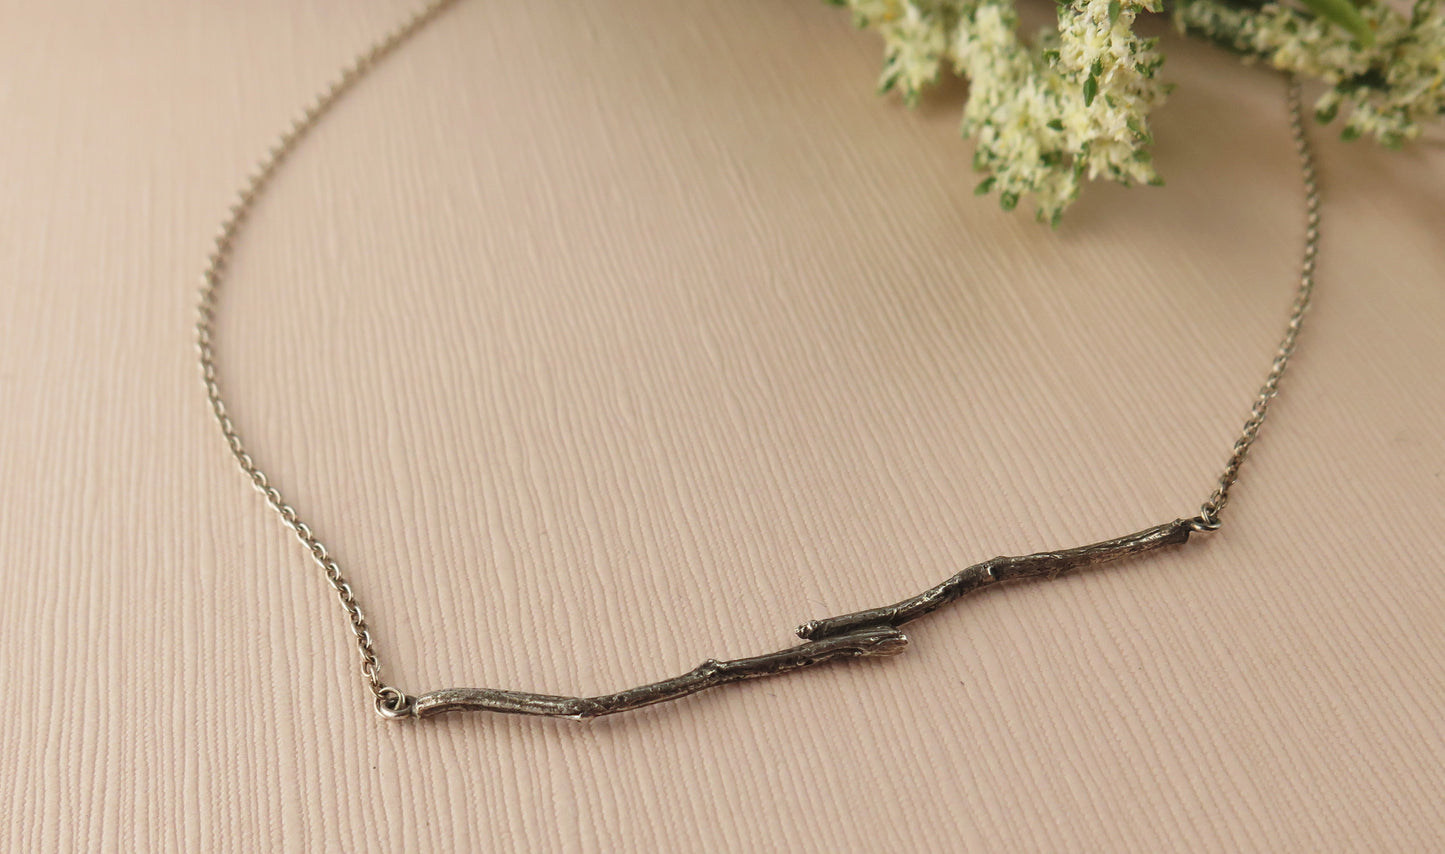 twig necklace, nature inspired jewelry, organic jewelry, textured jewellery 